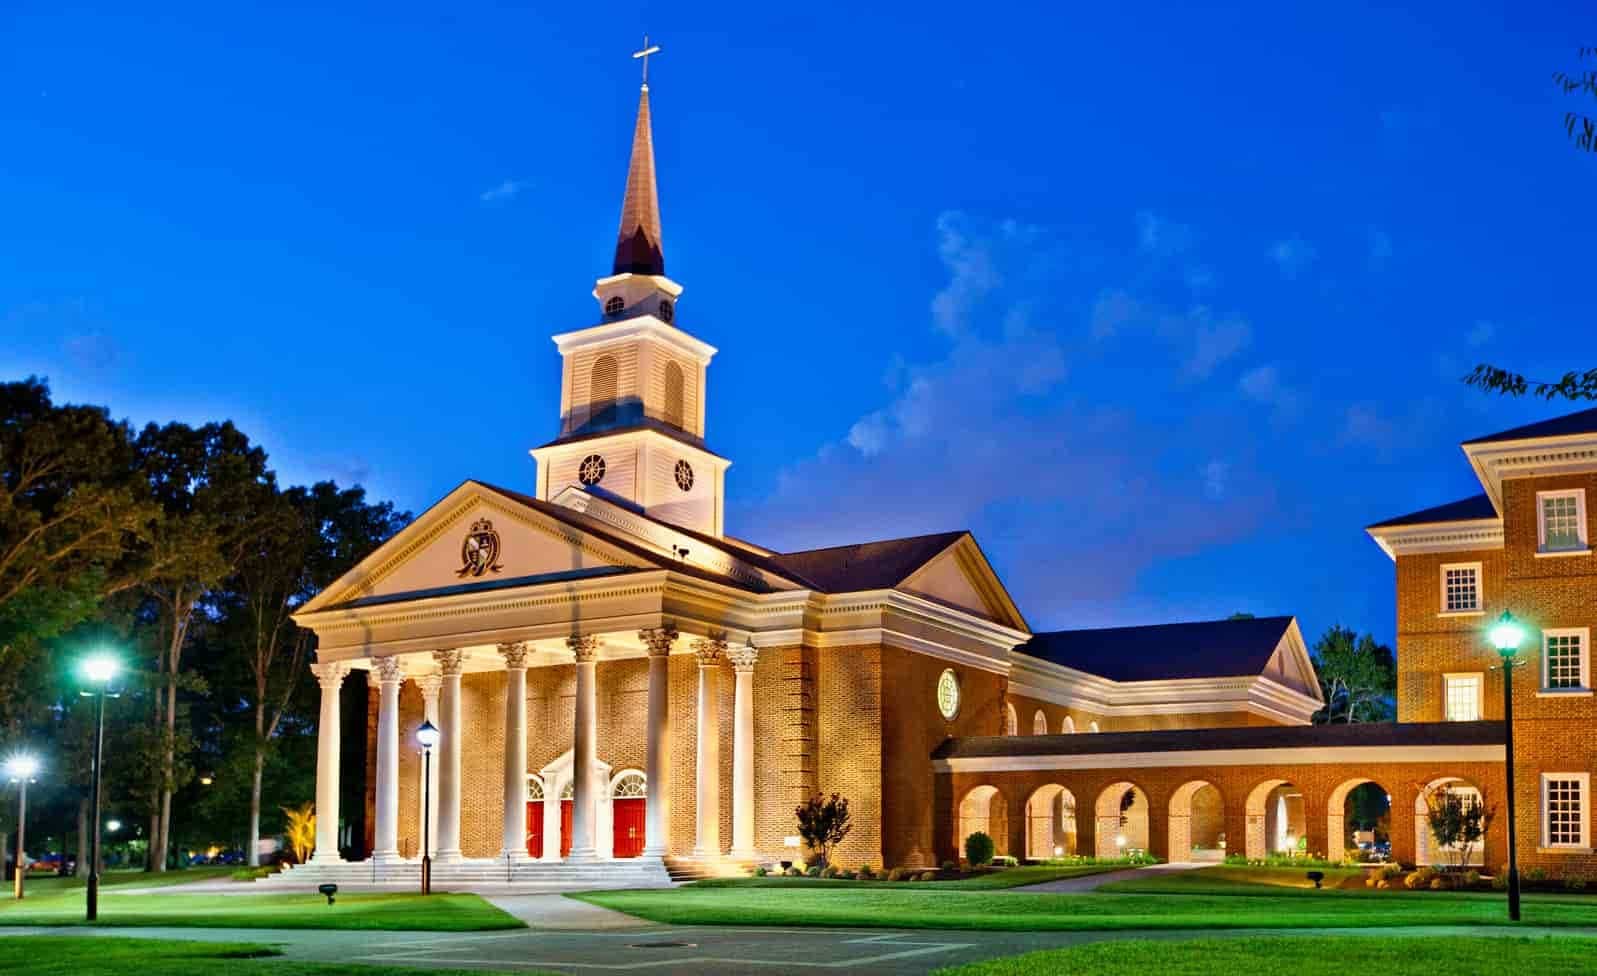 Regent University's chapel and Divinity Building in Virginia Beach, VA 23464.